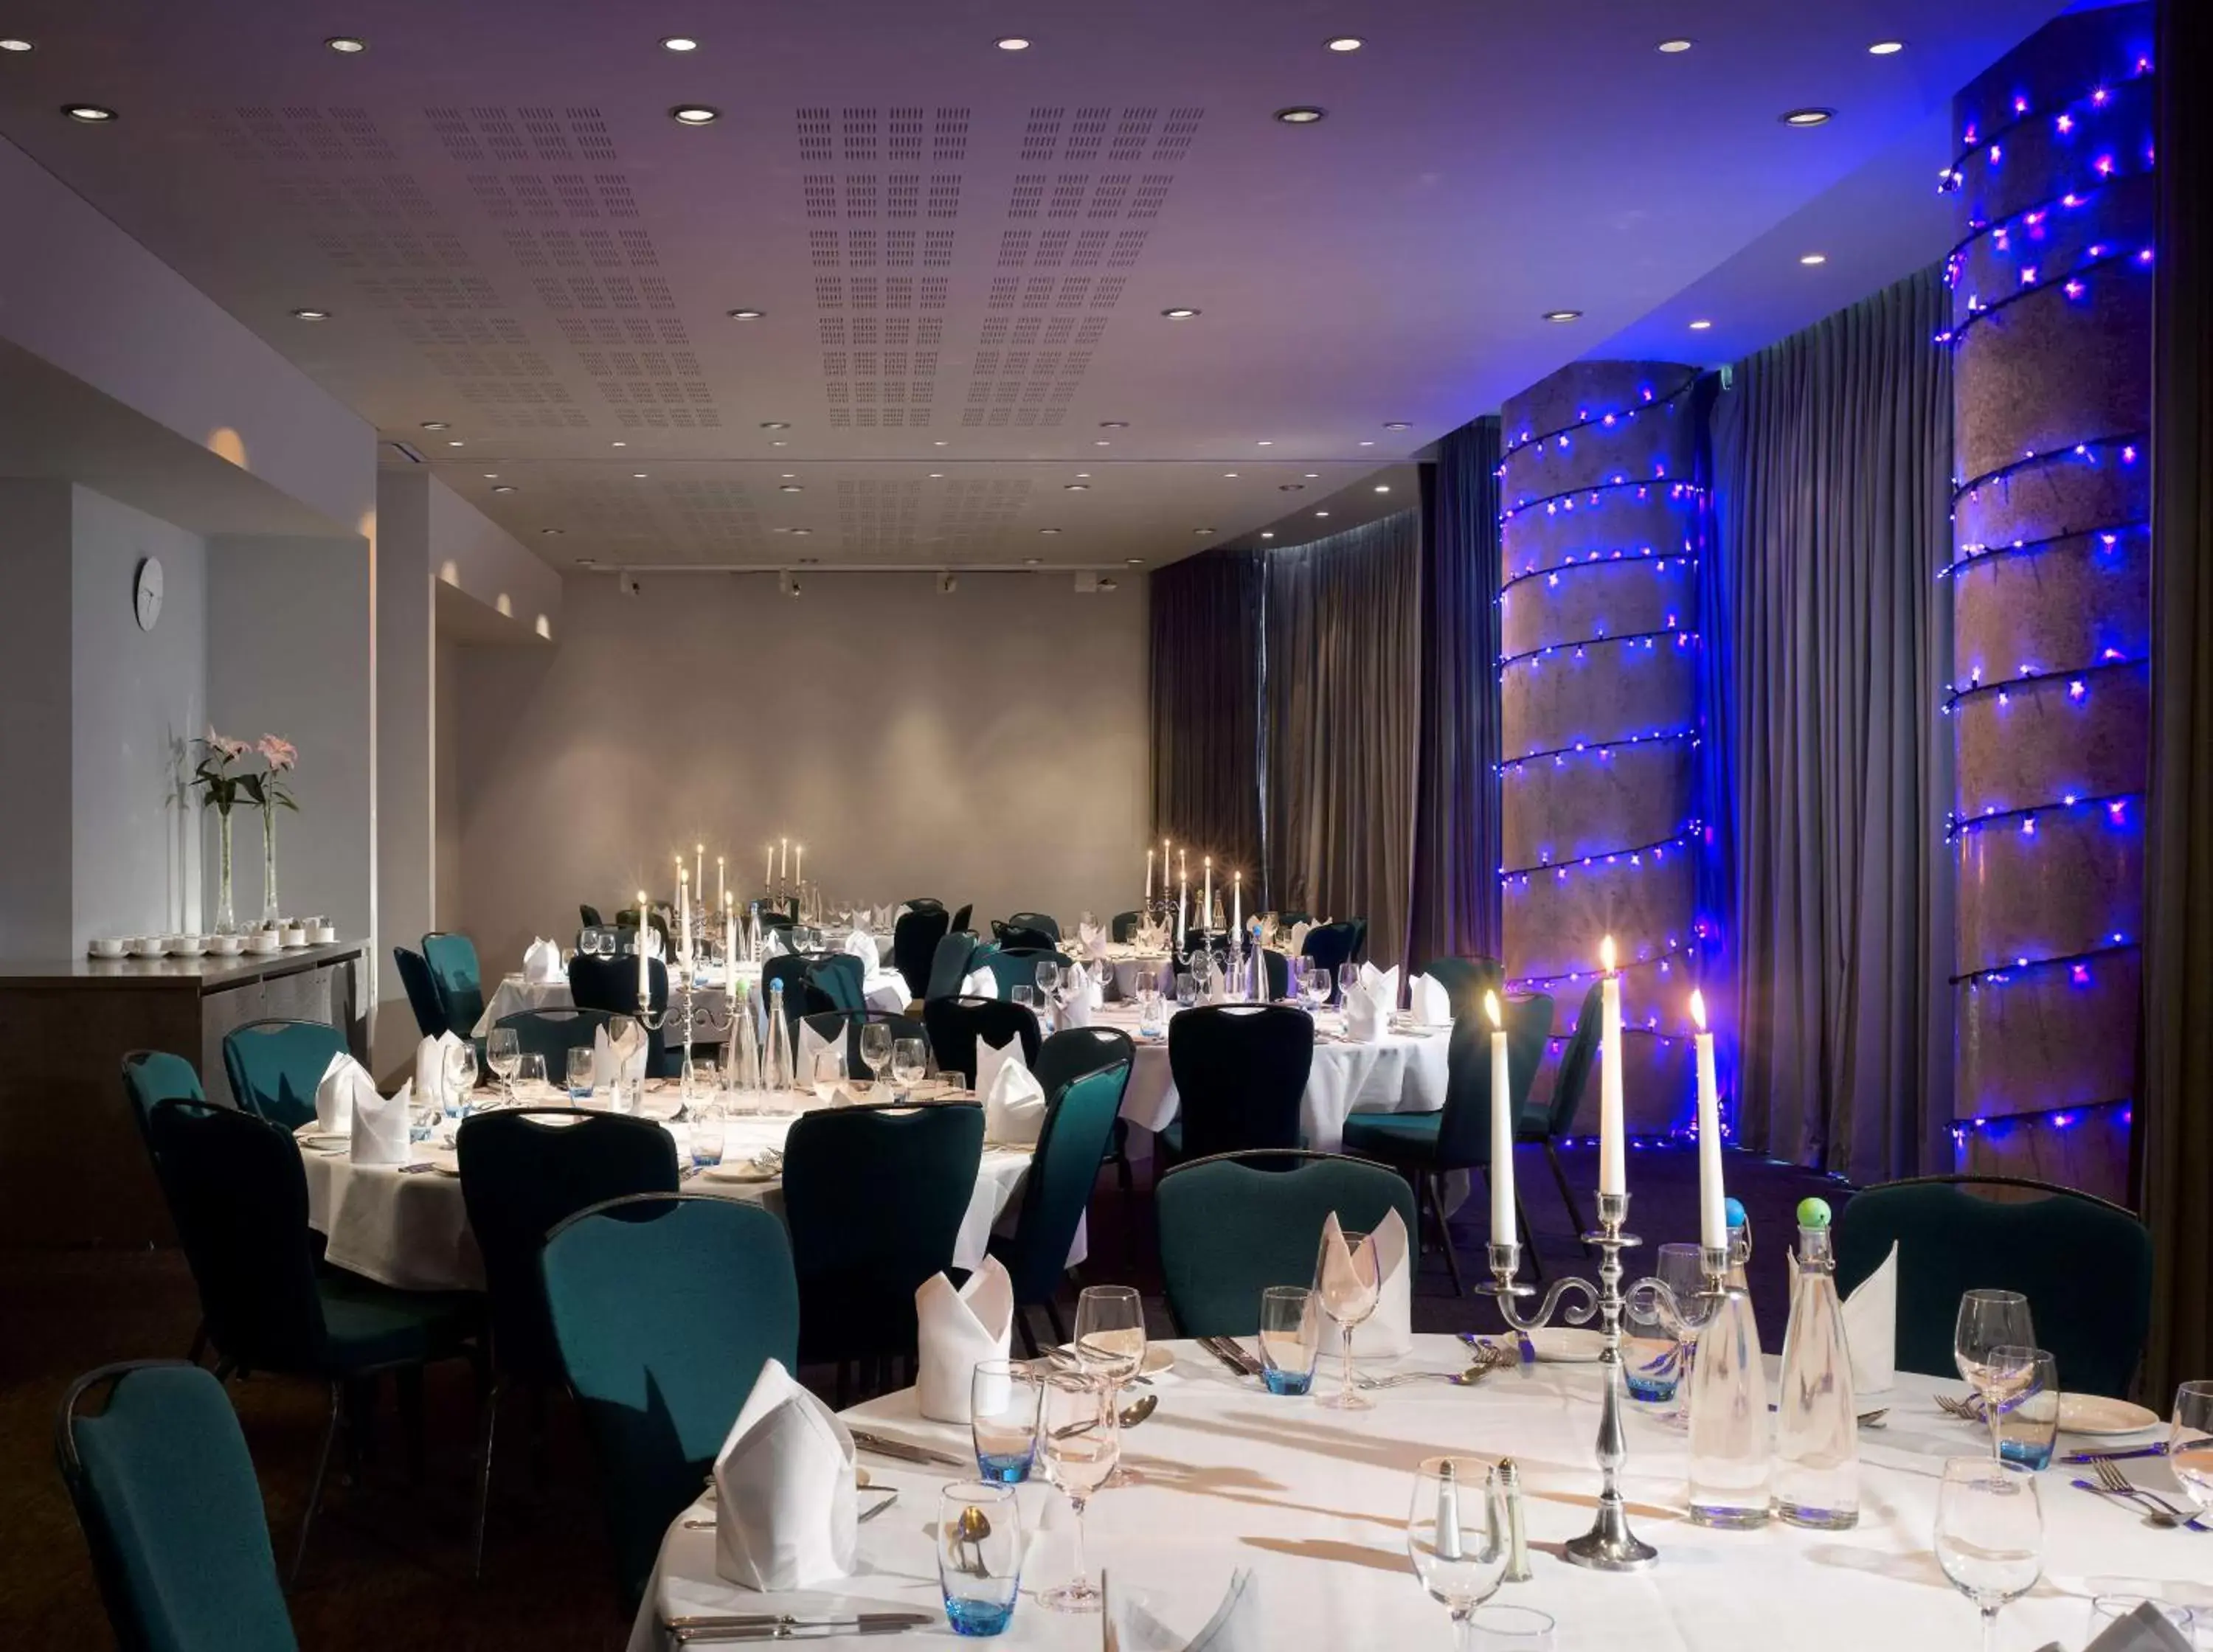 Banquet/Function facilities, Banquet Facilities in Radisson Blu Hotel, Birmingham